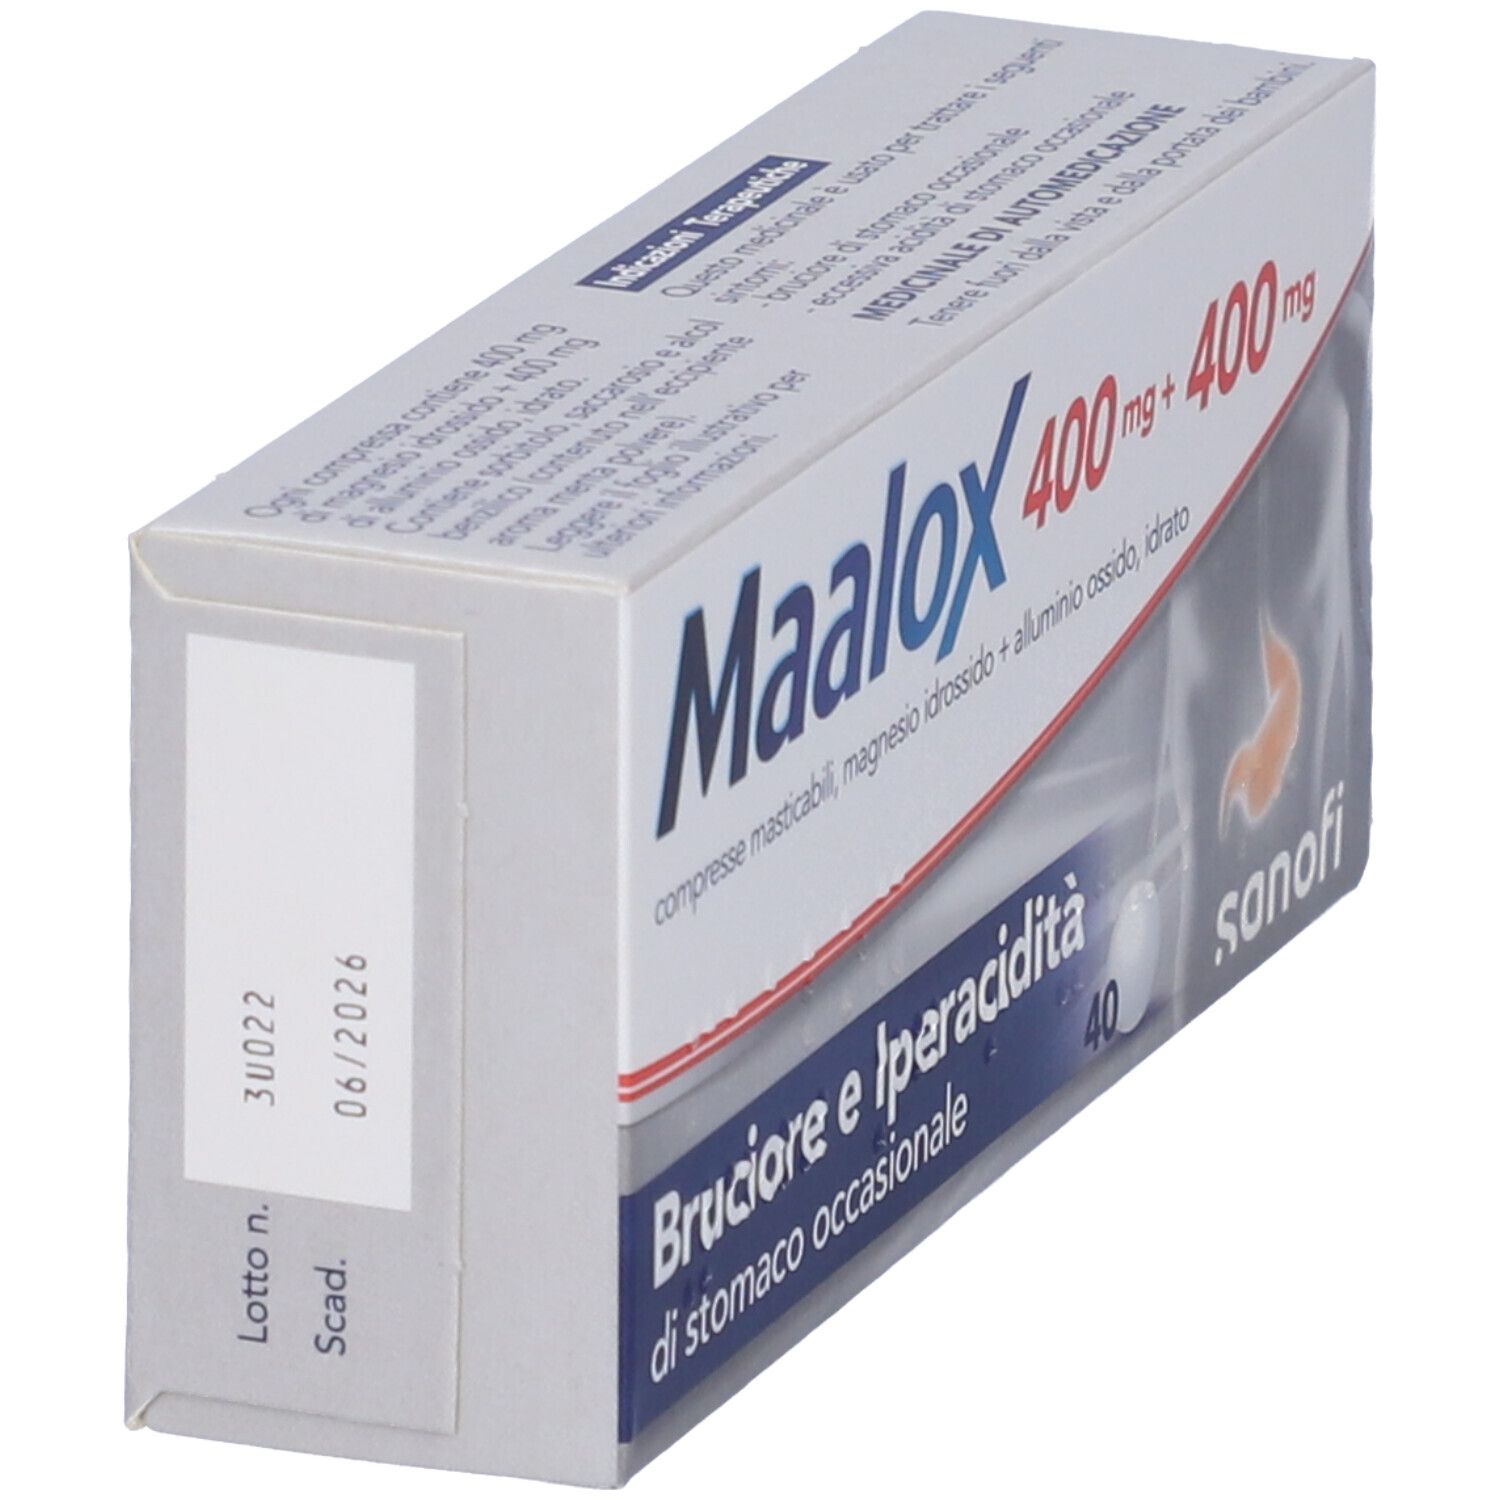 Maalox Compresse Masticabili